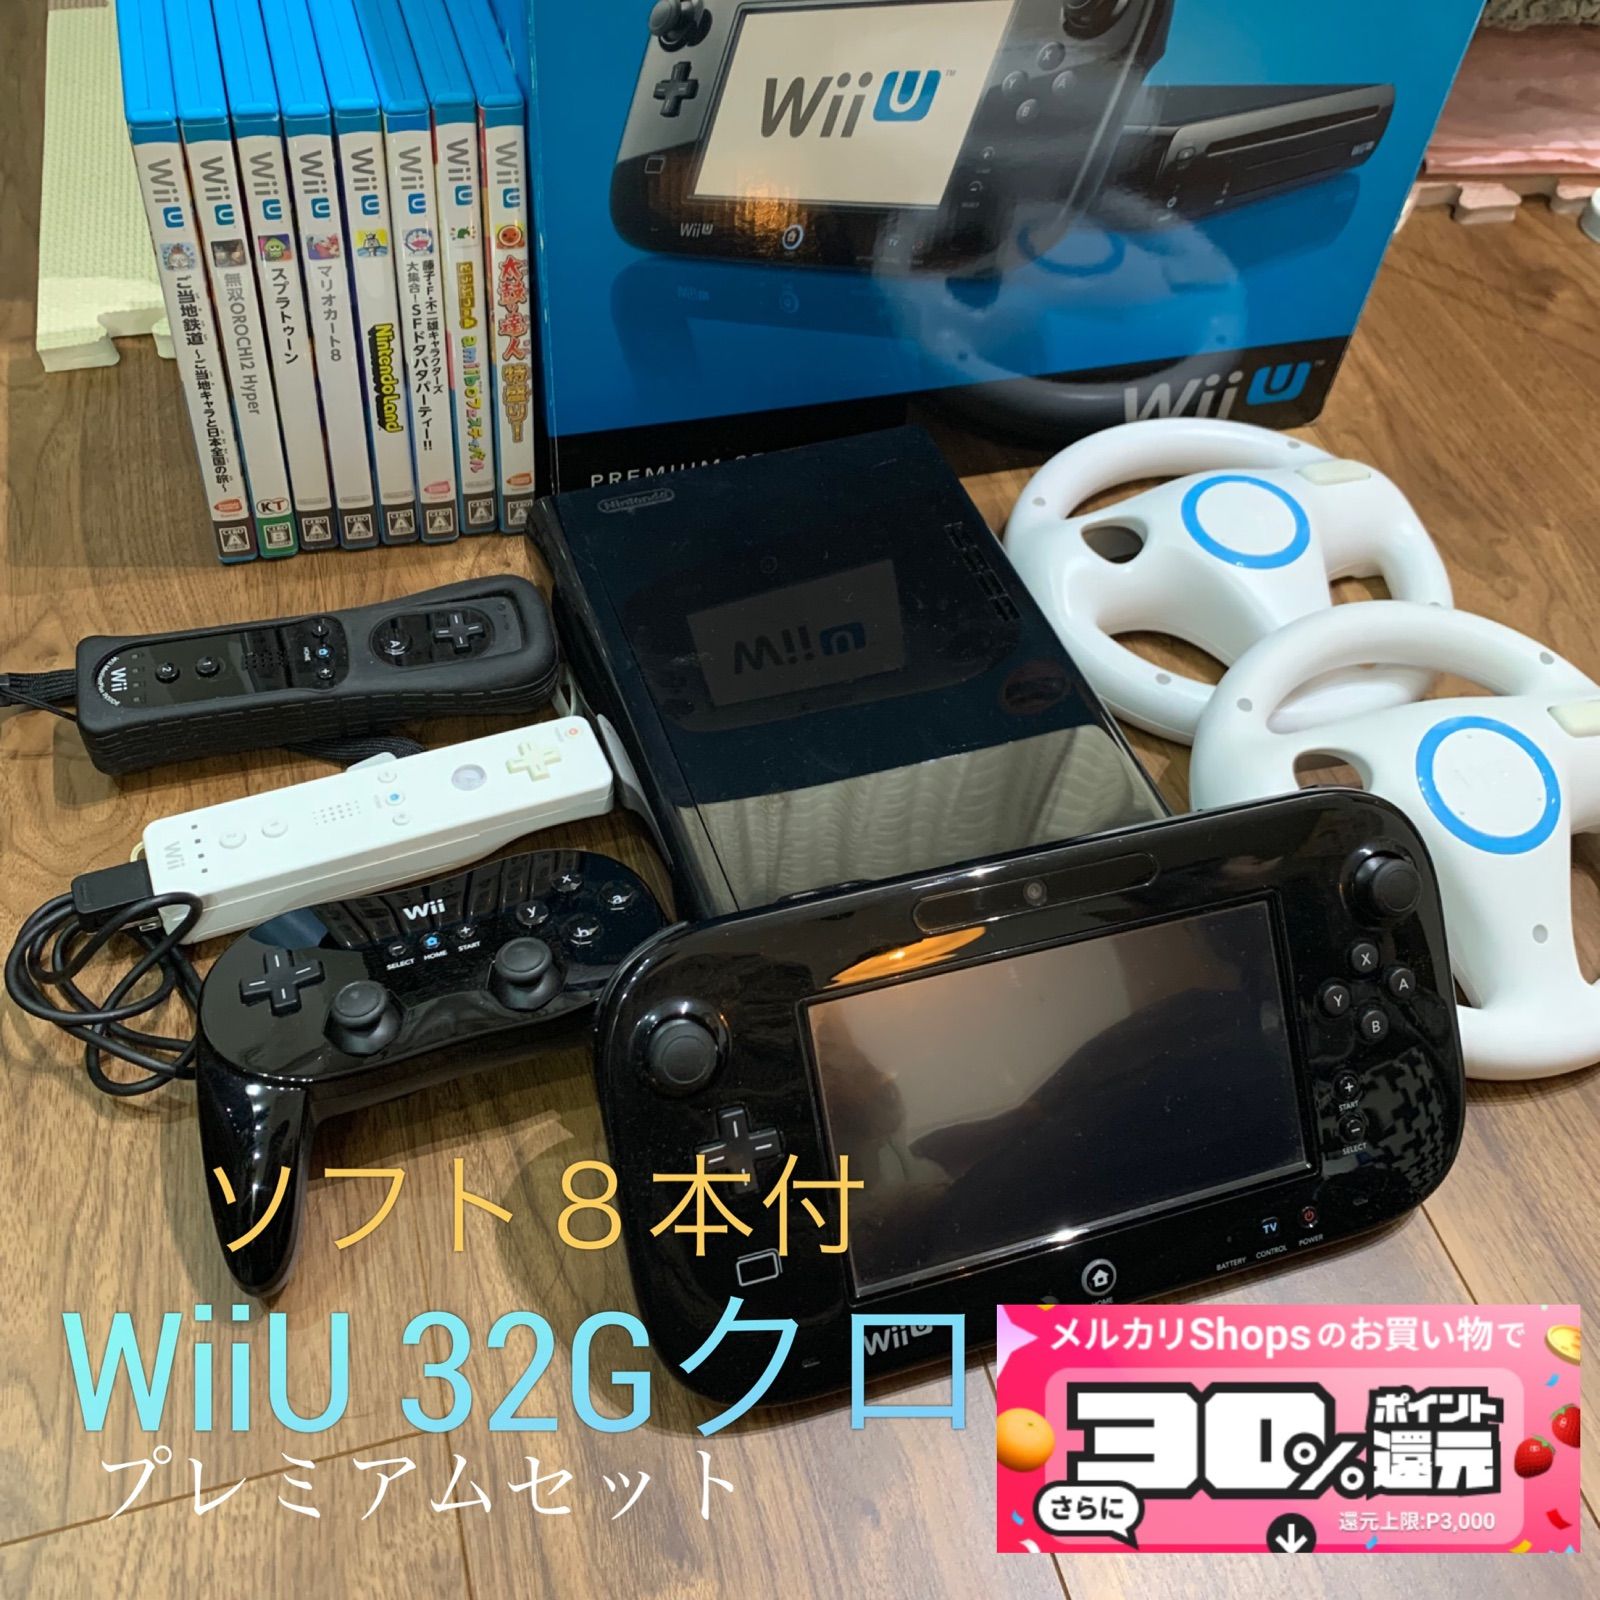 Nintendo Wii U プレミアムセット KURO＋ソフト8本付き - こまちSHOP ...